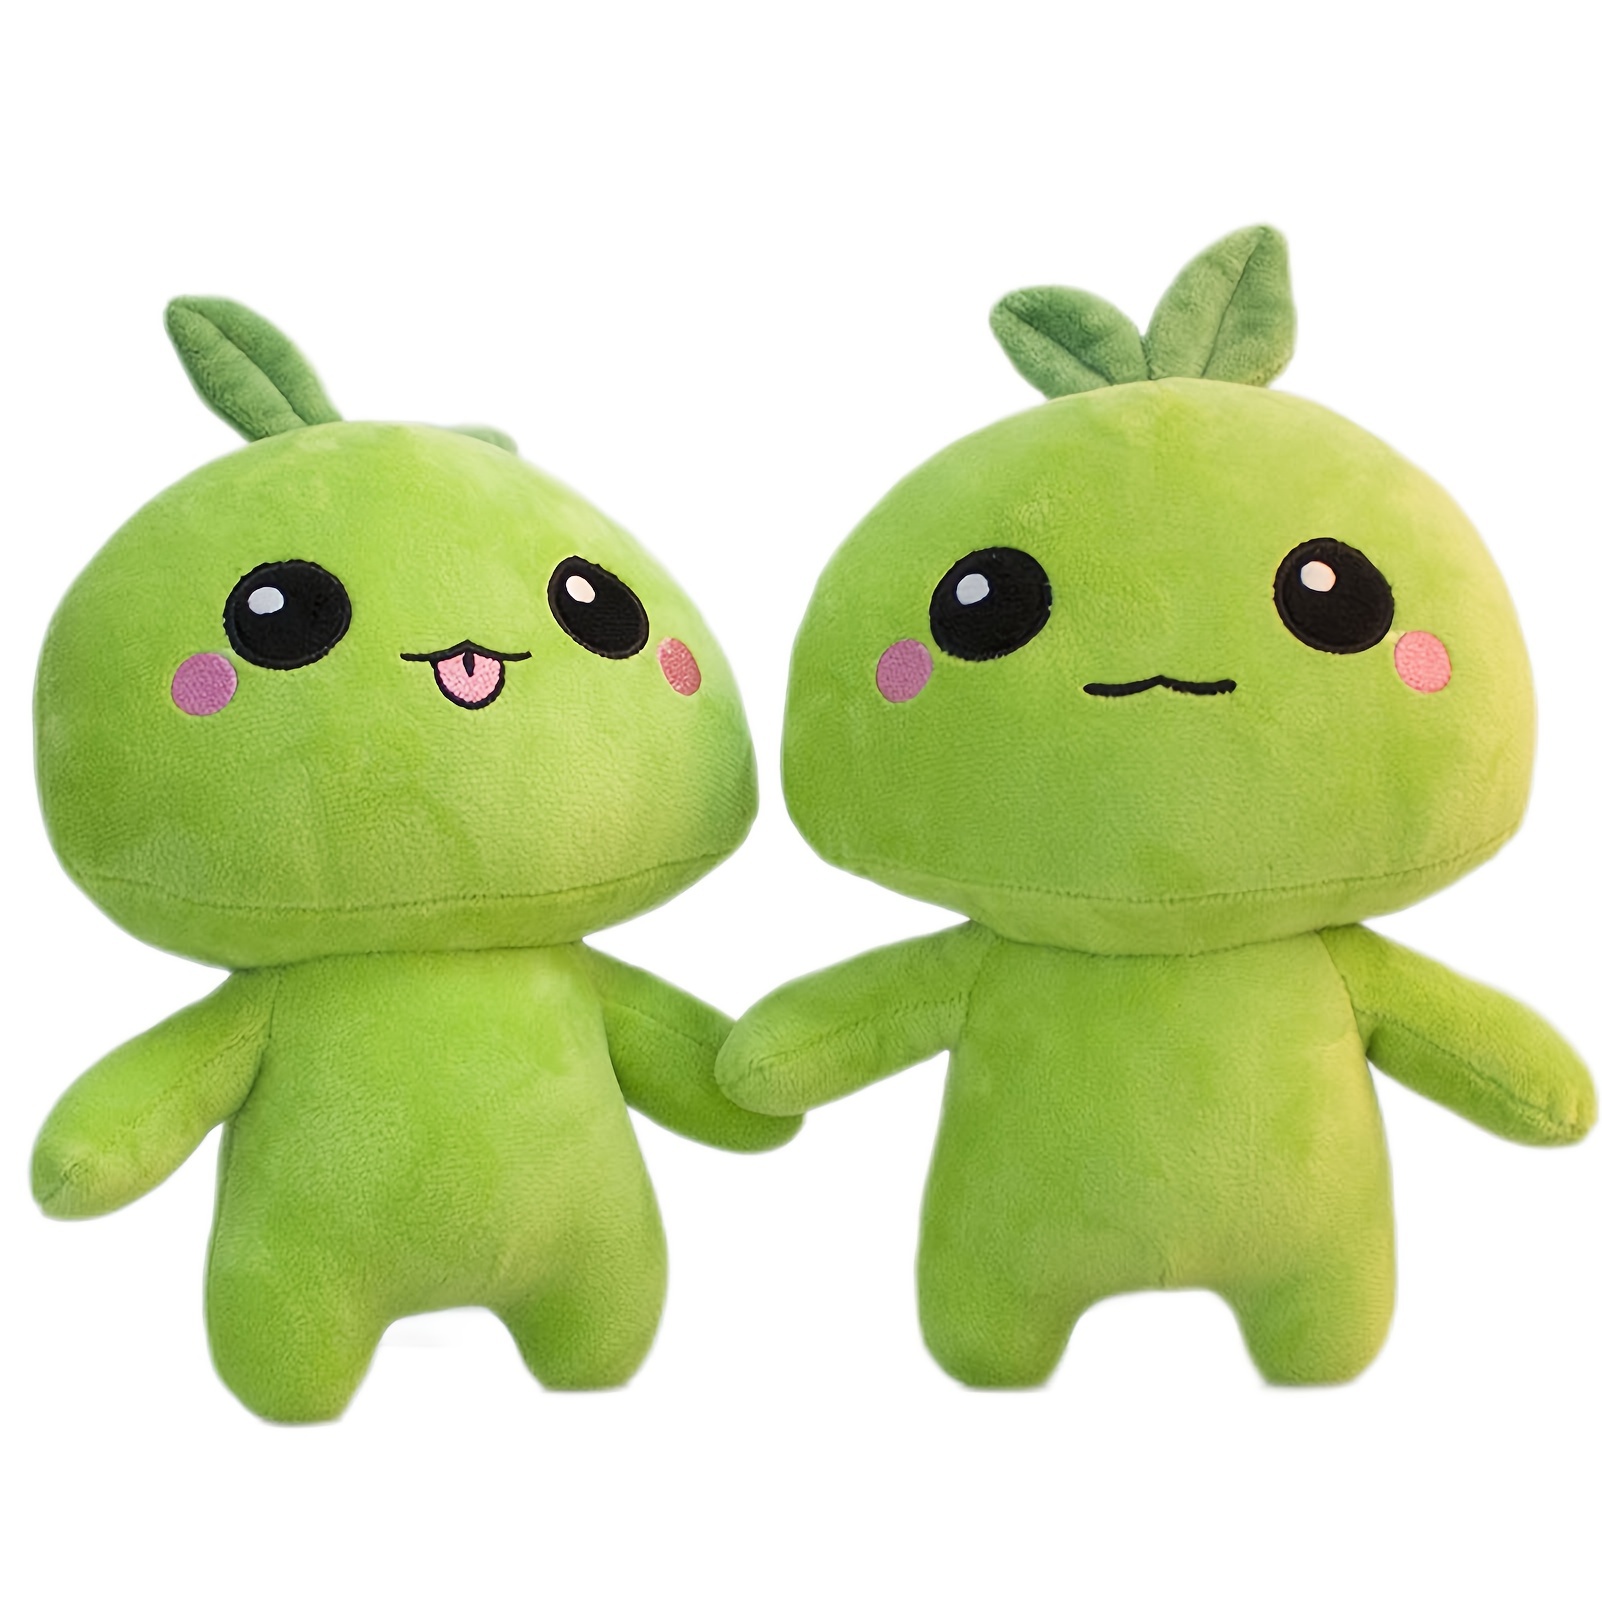 10 2 Plush Toy Lost Ark Game Toy Plush Stuffed Animals Green Mokoko Doll Soft Baby Toys Gift Toys For Kids Girls